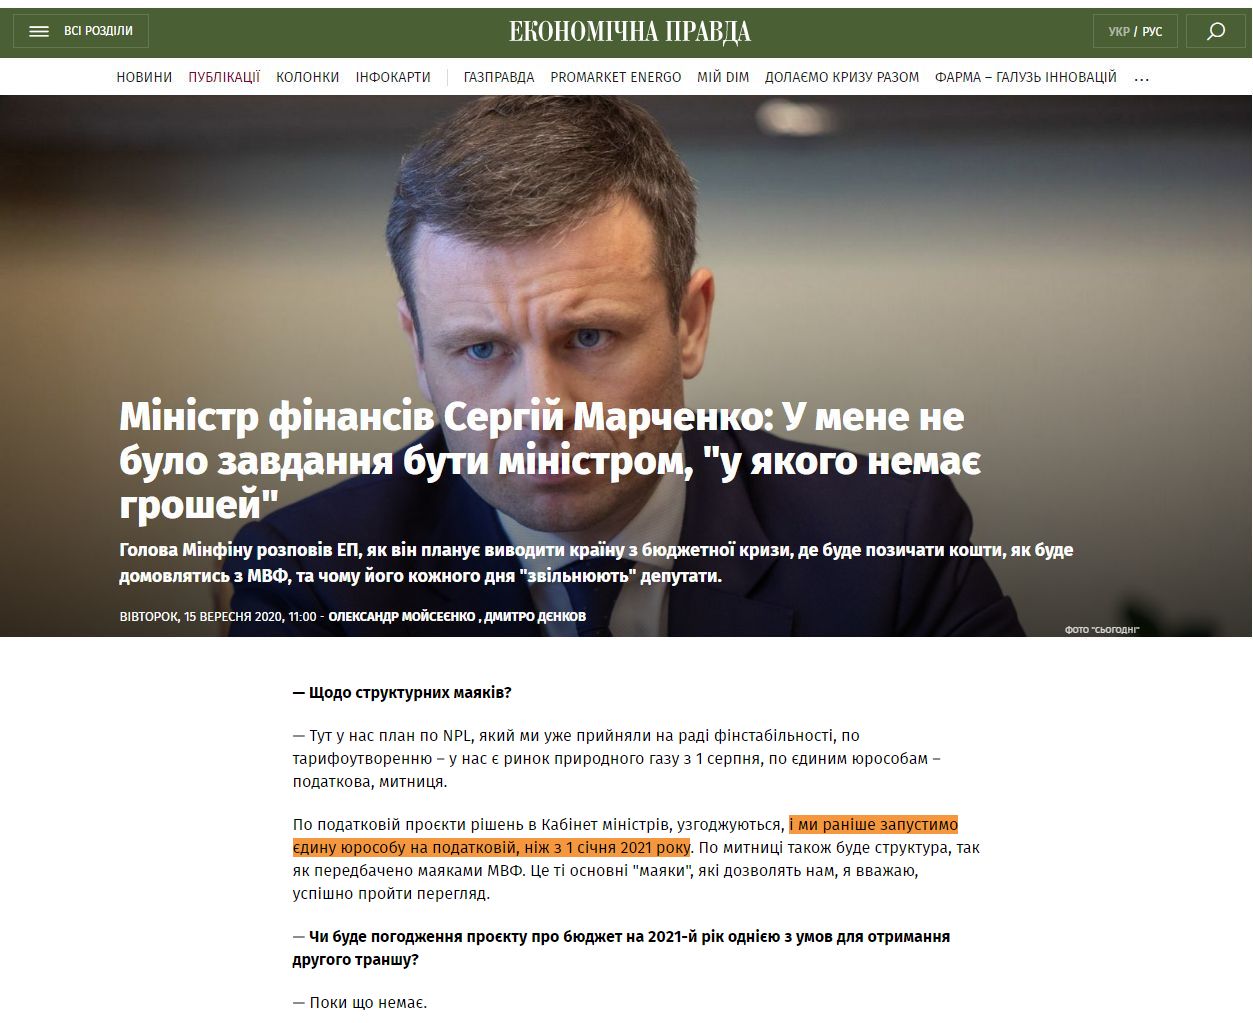 https://www.epravda.com.ua/publications/2020/09/15/665101/